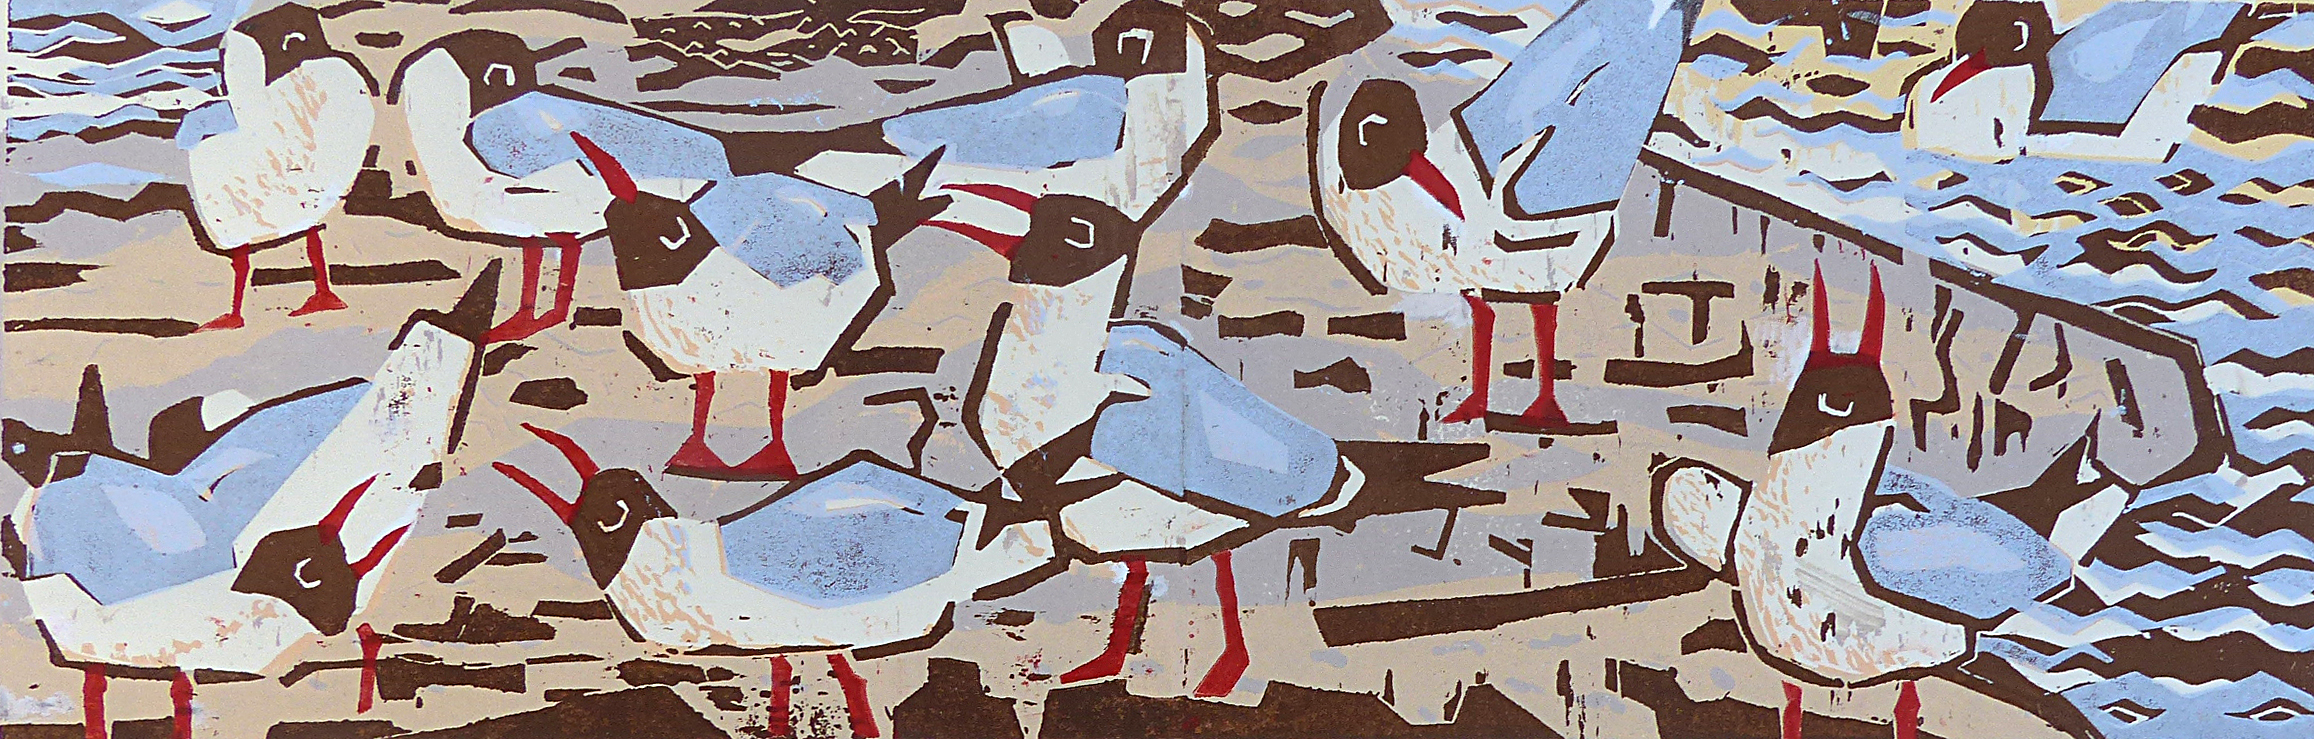   Black headed gulls - Elmley Marshes.   Woodcut. Edition of 20 